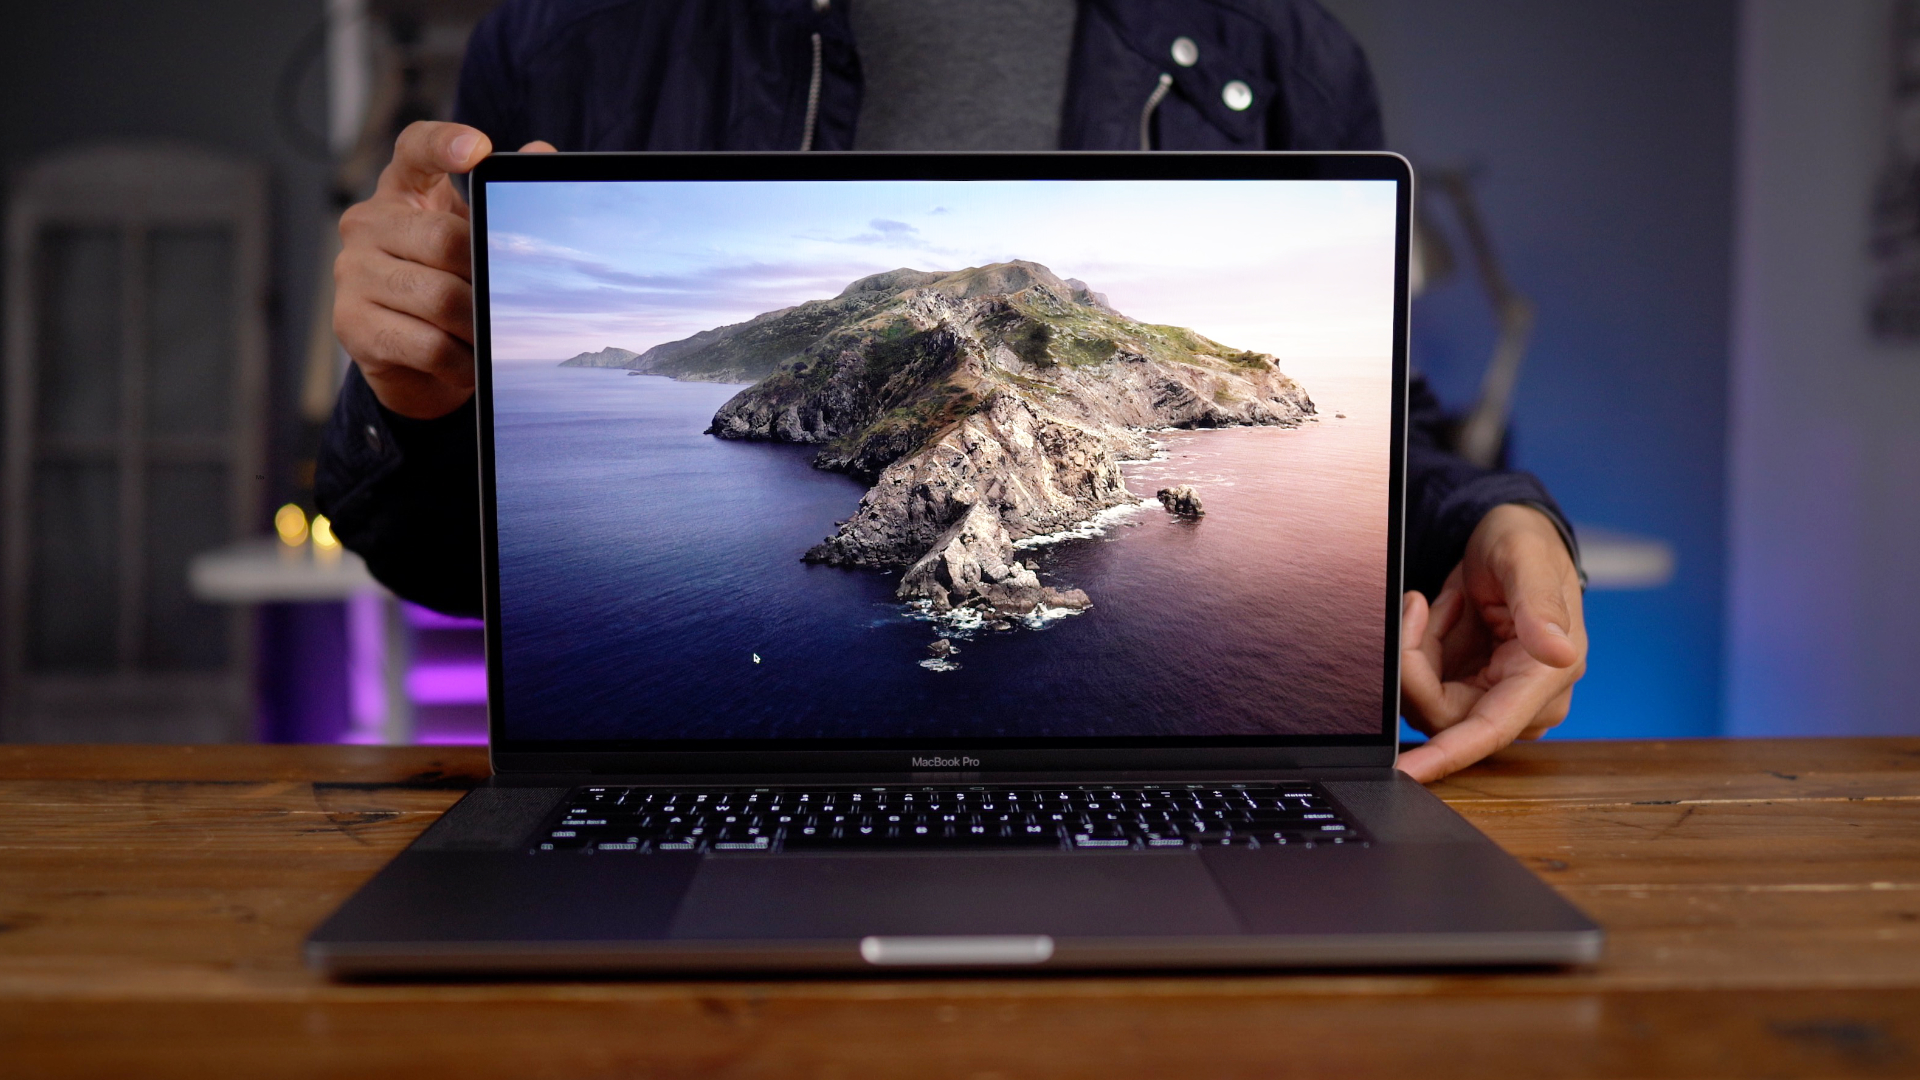 MacBook-Pro-Review-9to5Mac.jpg